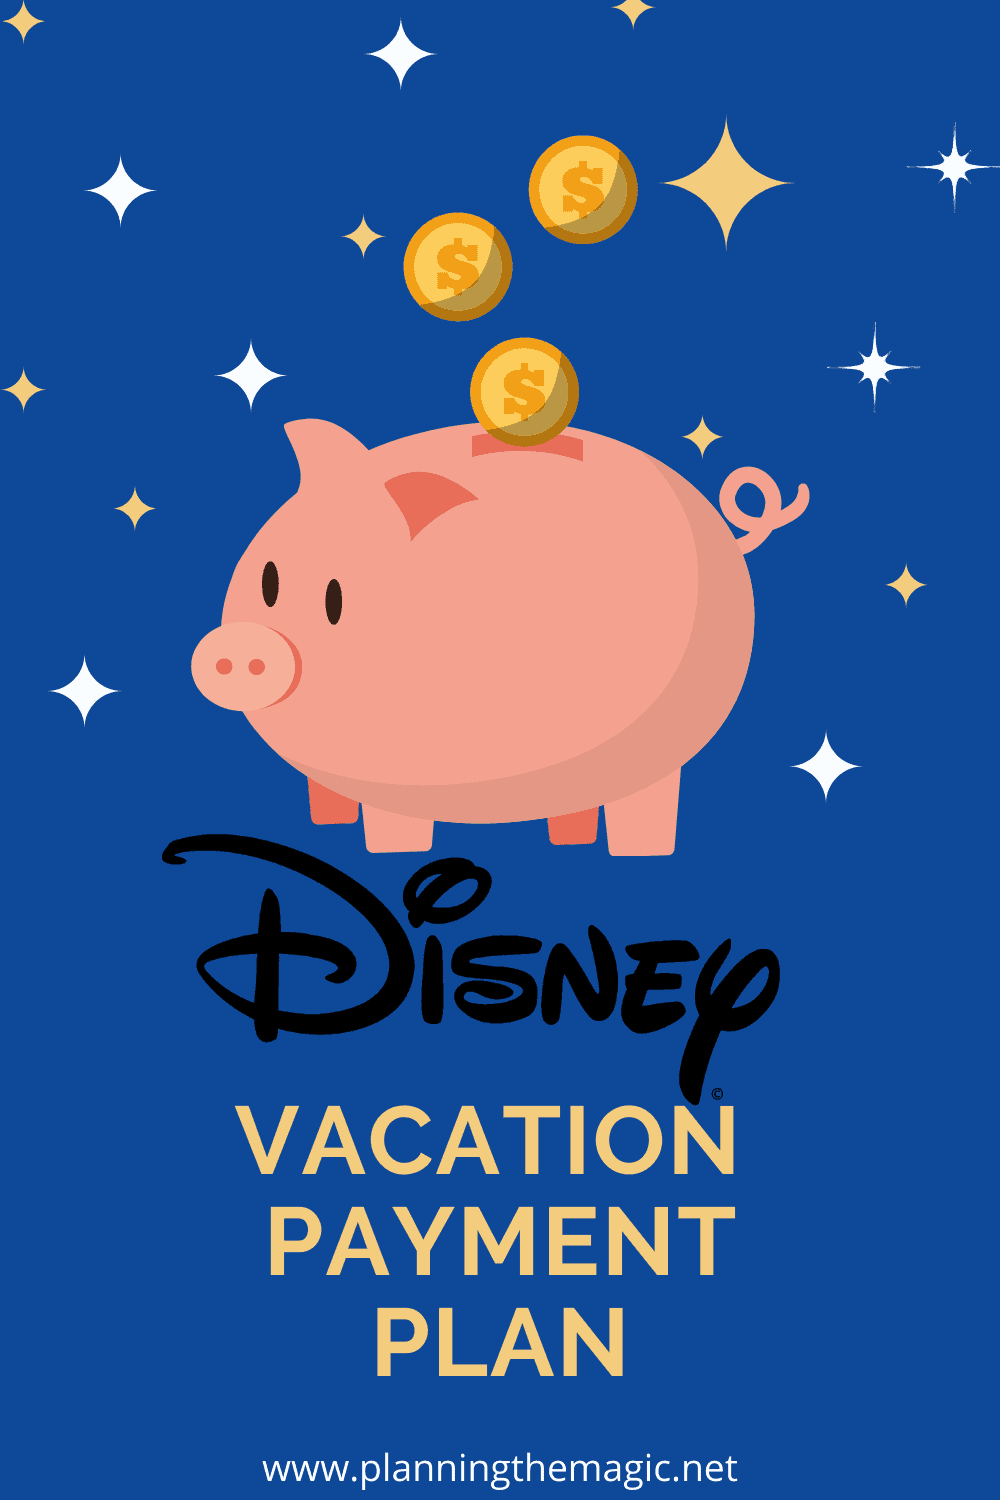 disney vacation payment plan 2021